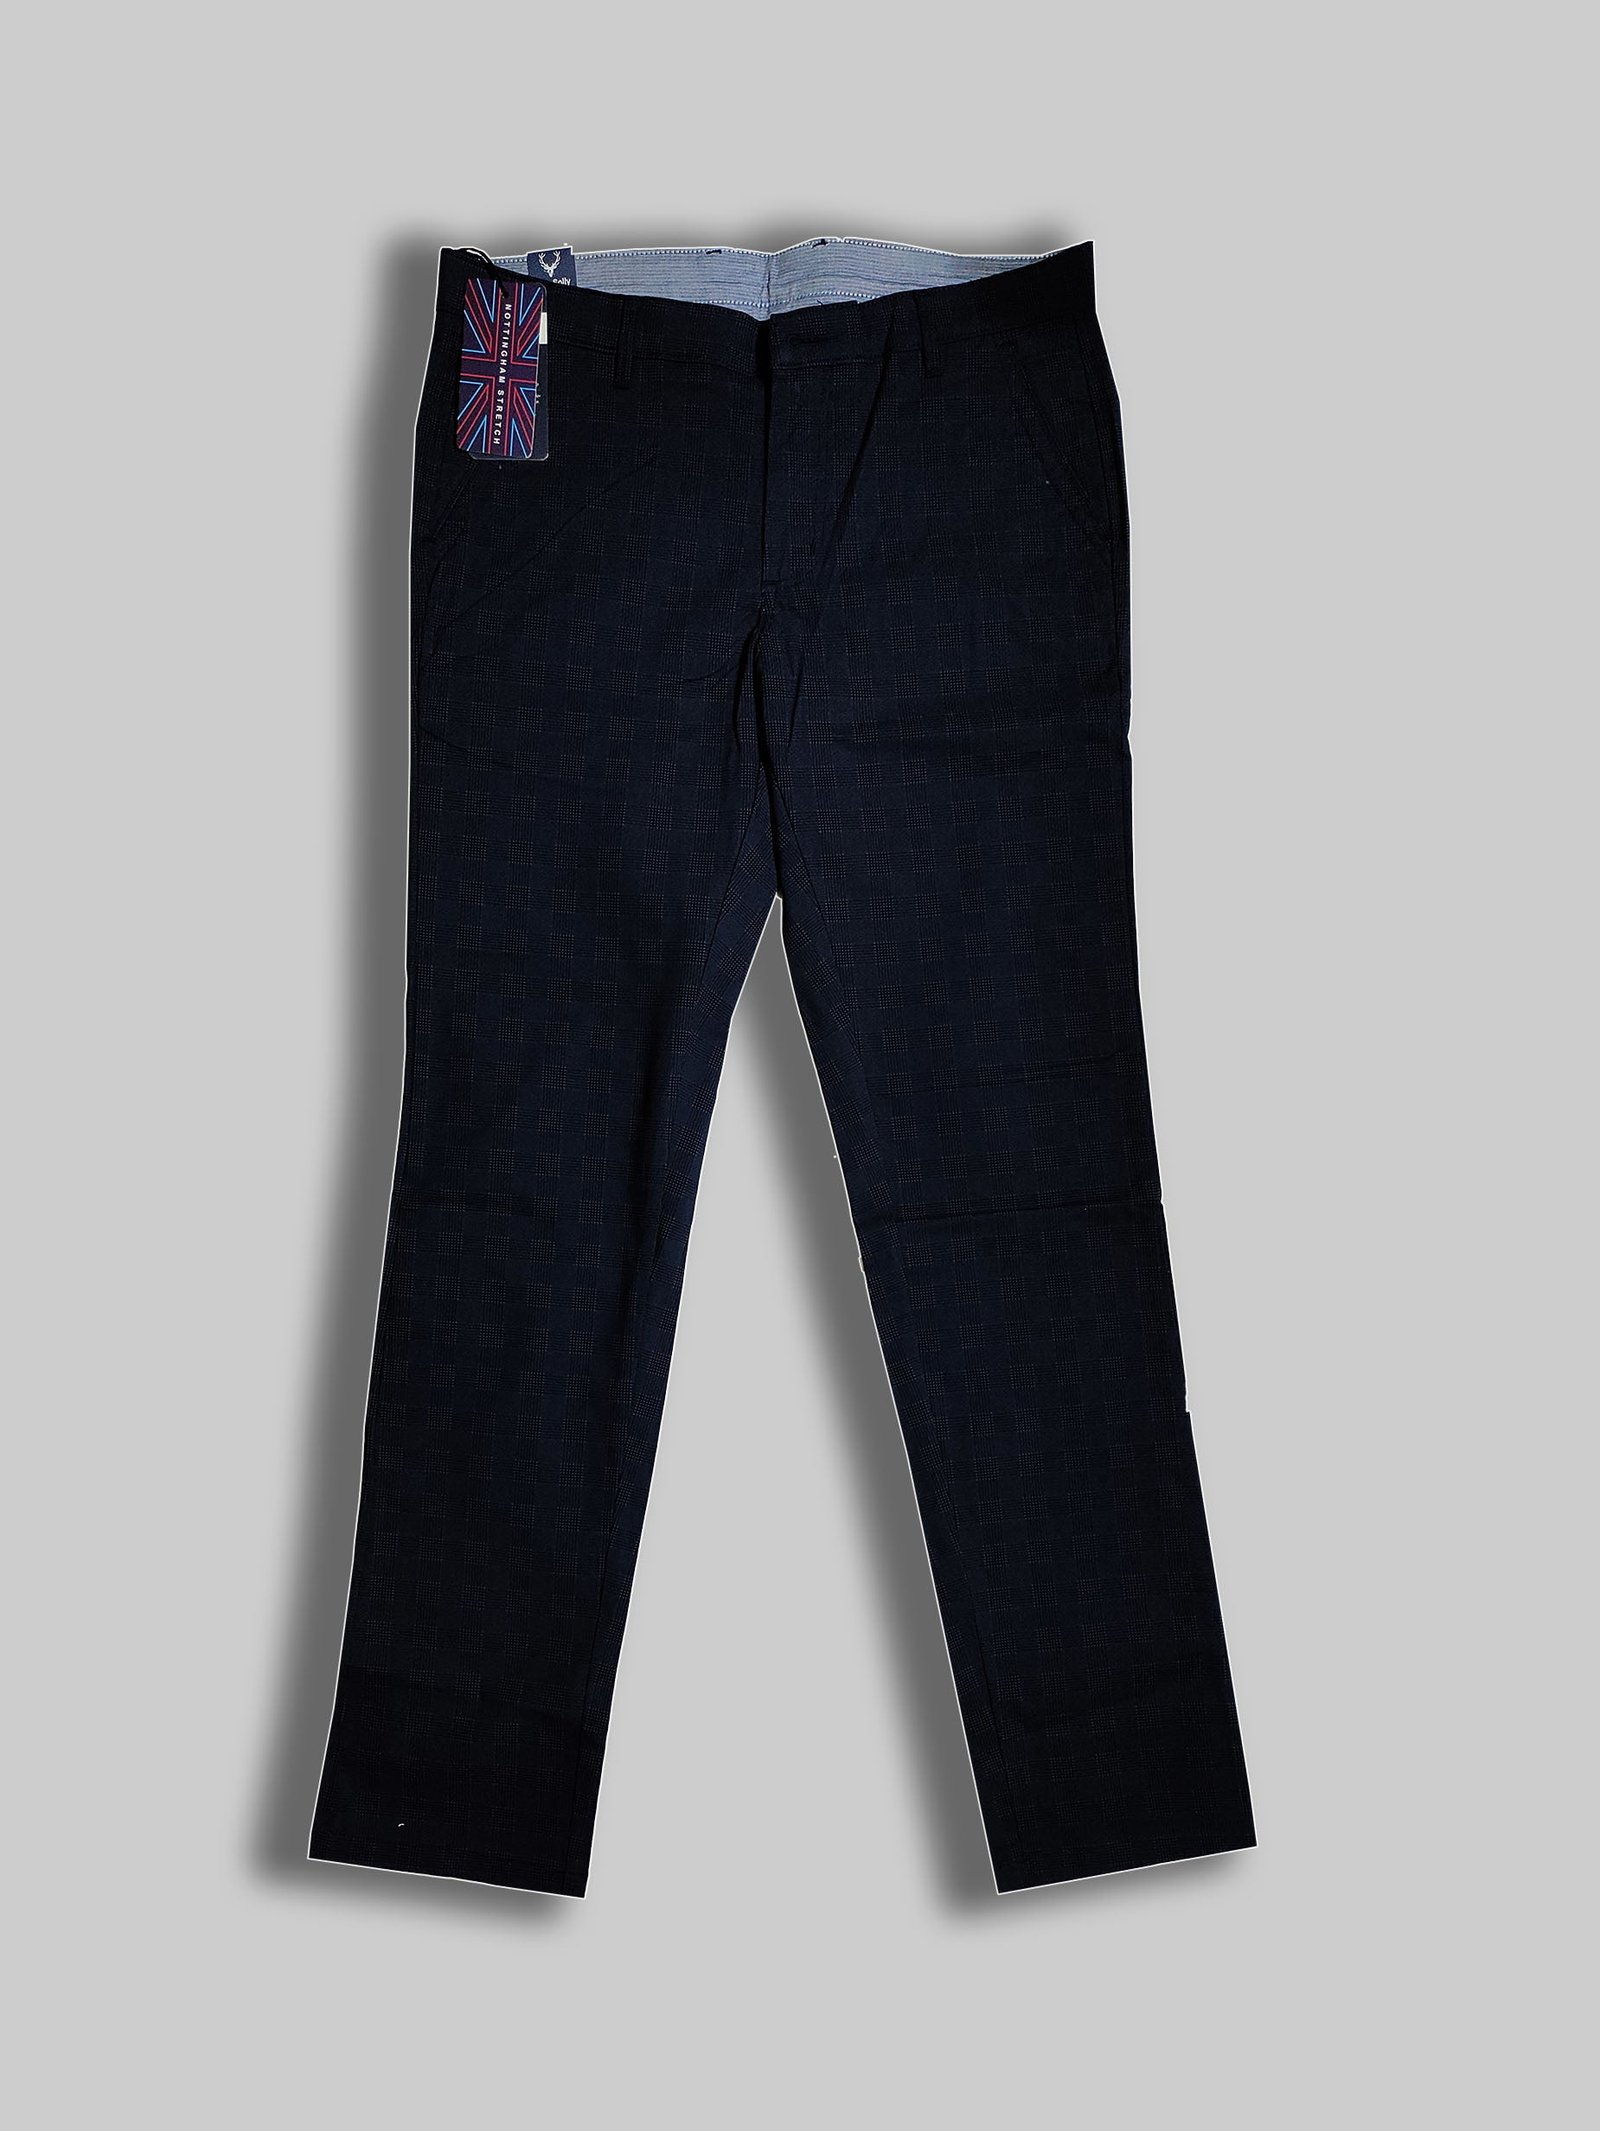 Buy Women Black Slim Fit Solid Formal Trousers Online - 85314 | Allen Solly